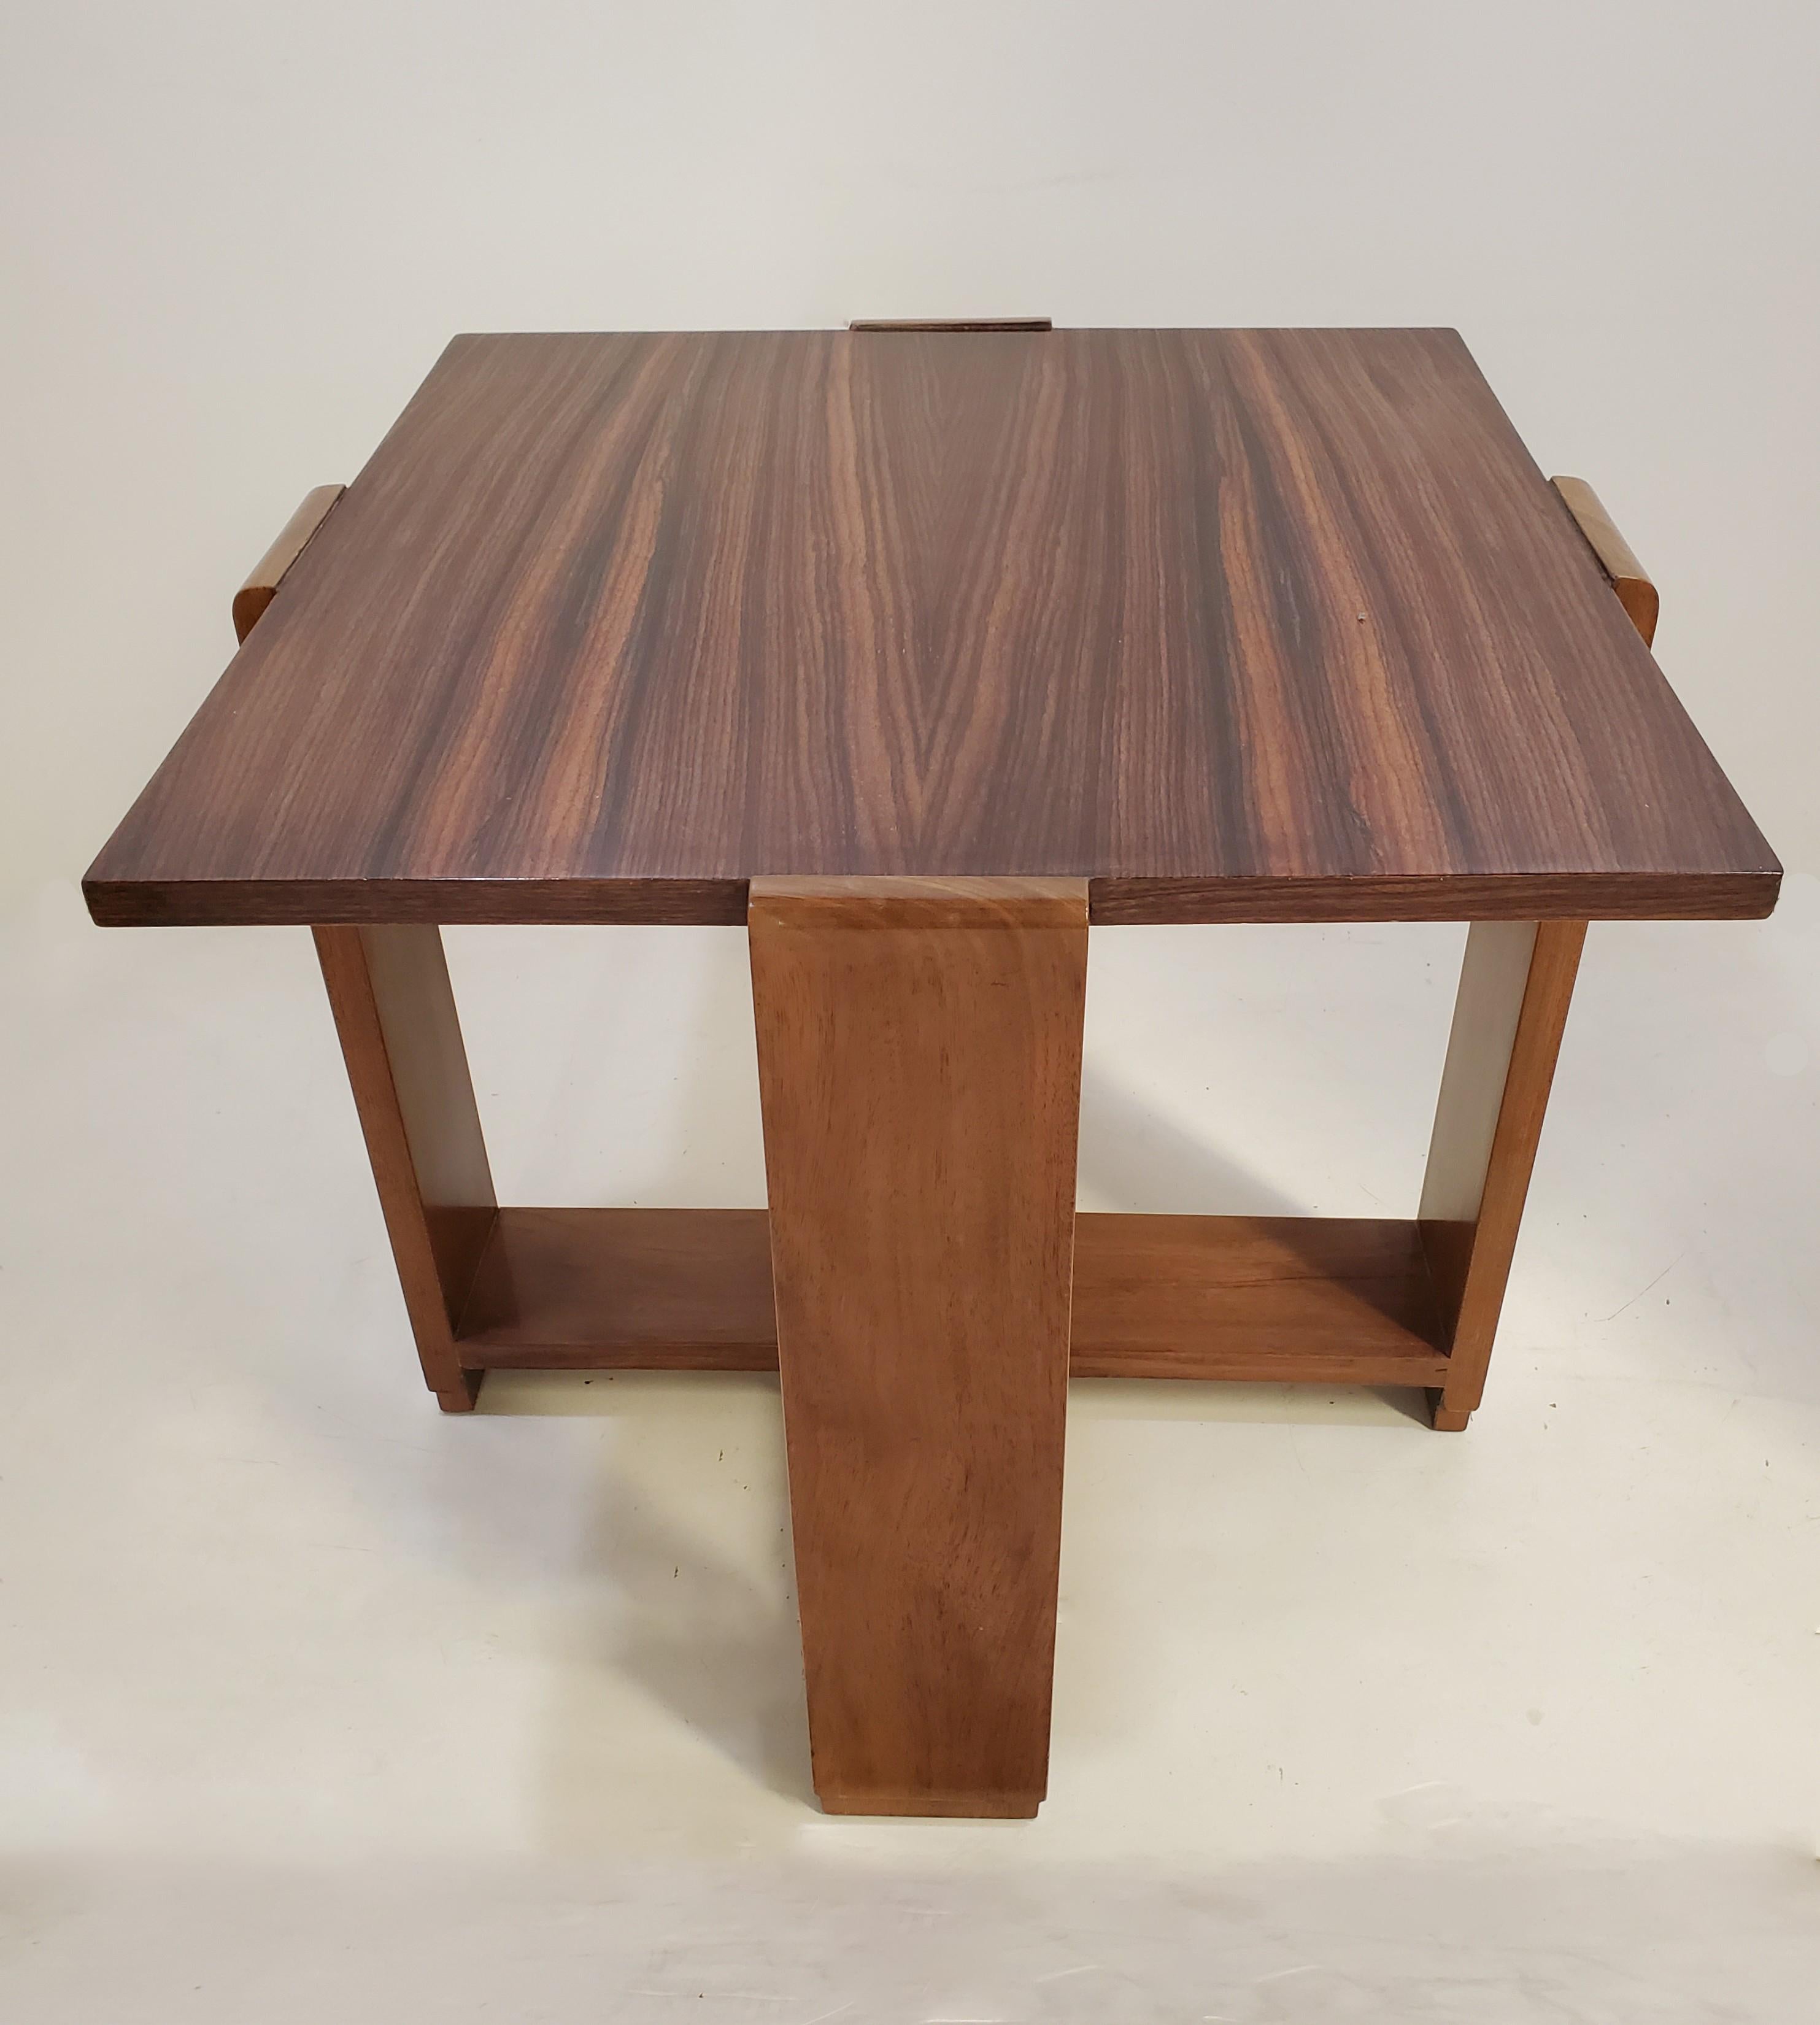 Original French Art Deco Macassar Ebony Square Table, Michel Roux-Spitz For Sale 2